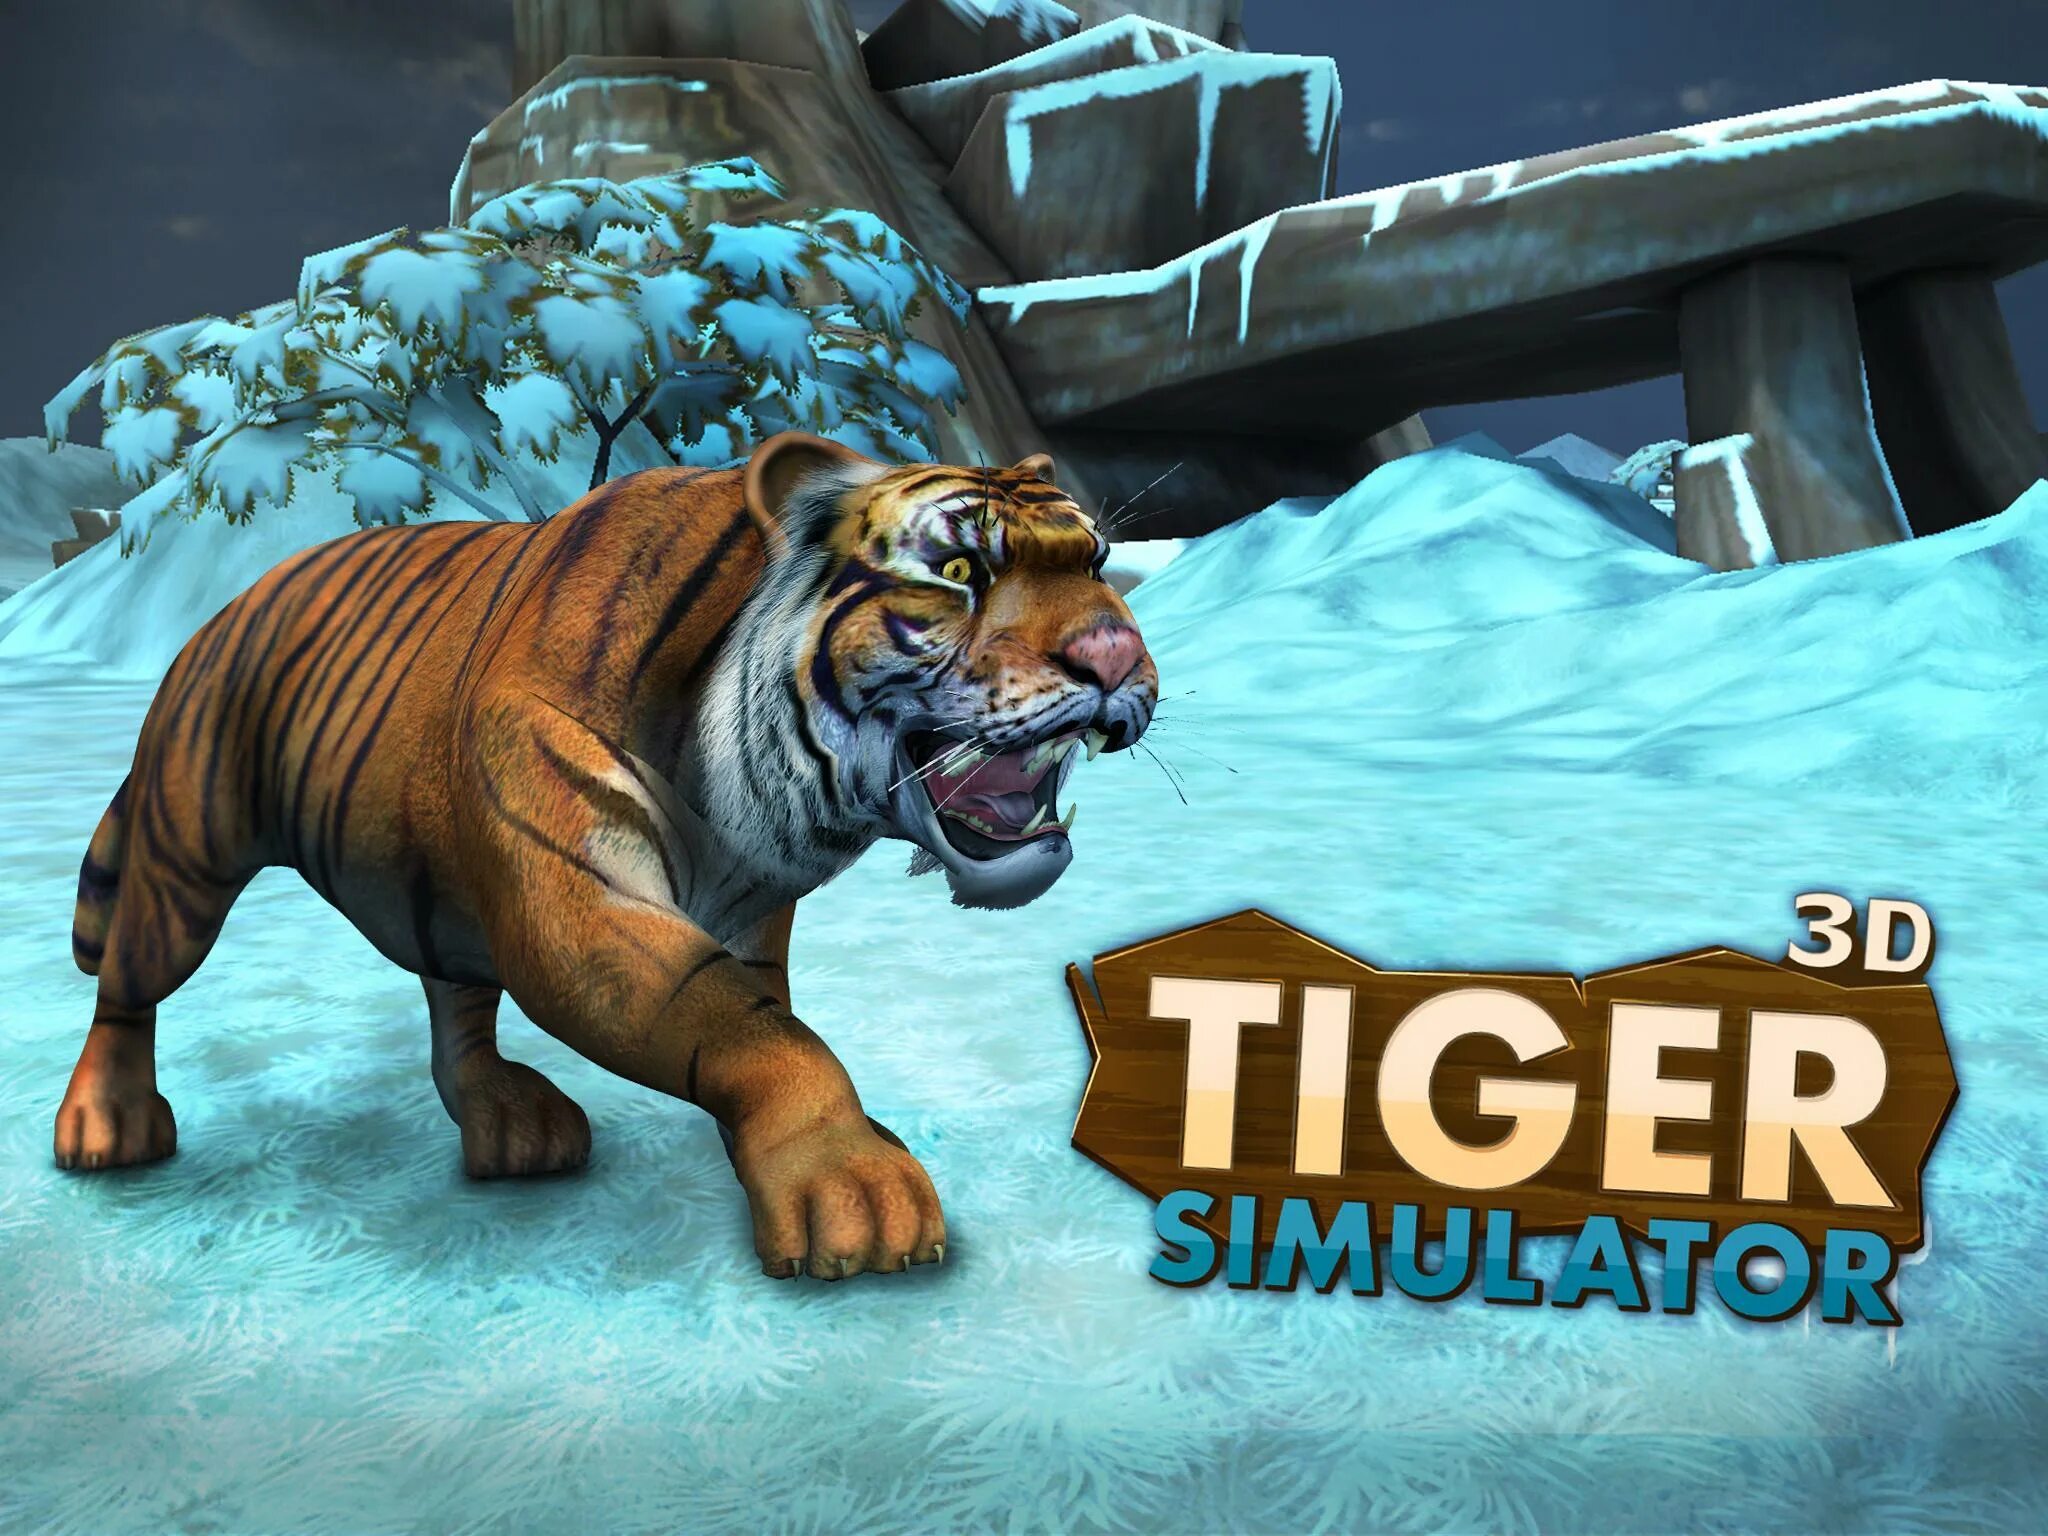 The Tiger игра. Игры для тигры. Симулятор тигра 3д. Игра тигрица.